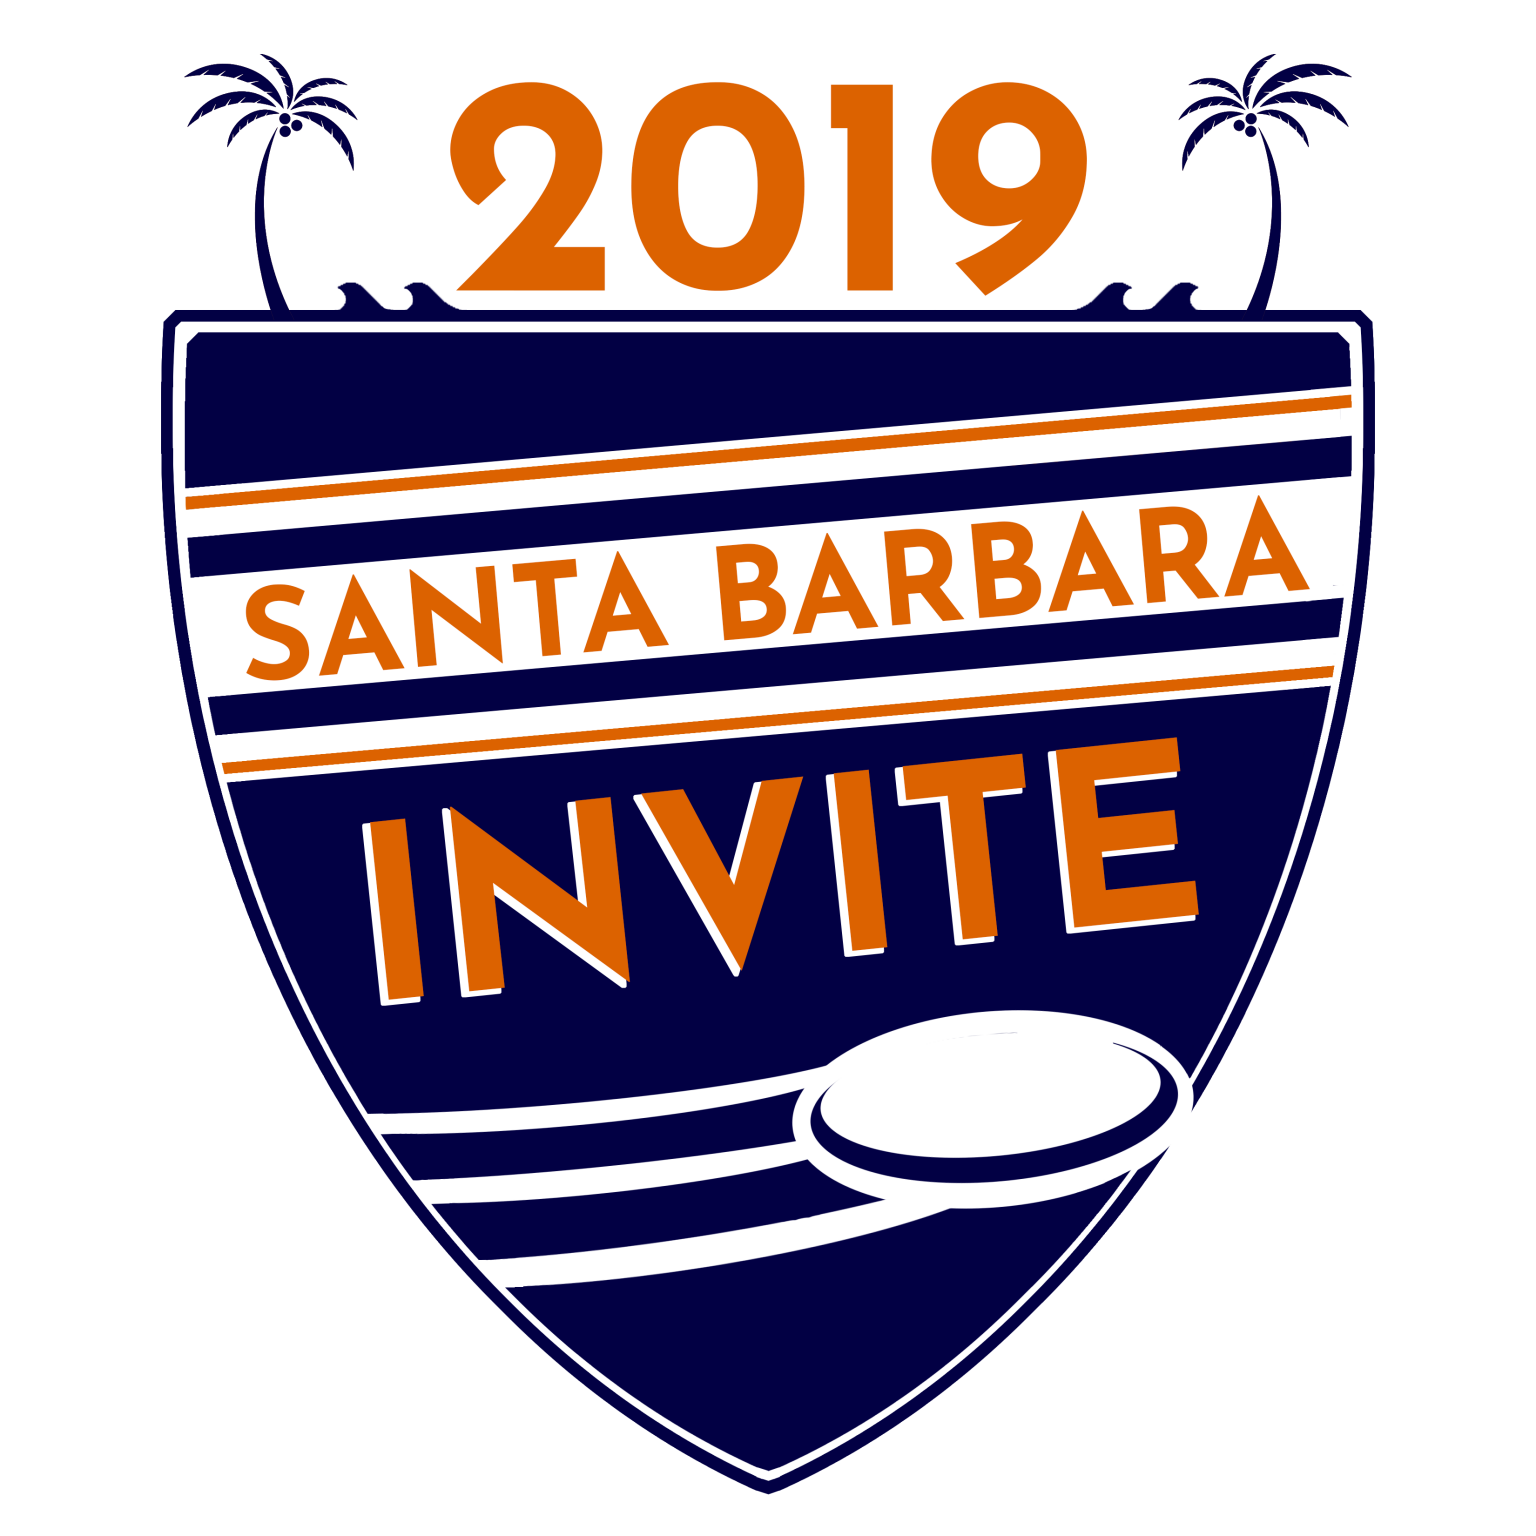 Santa Barbara Invite 2019 Team List Livewire Ultiworld